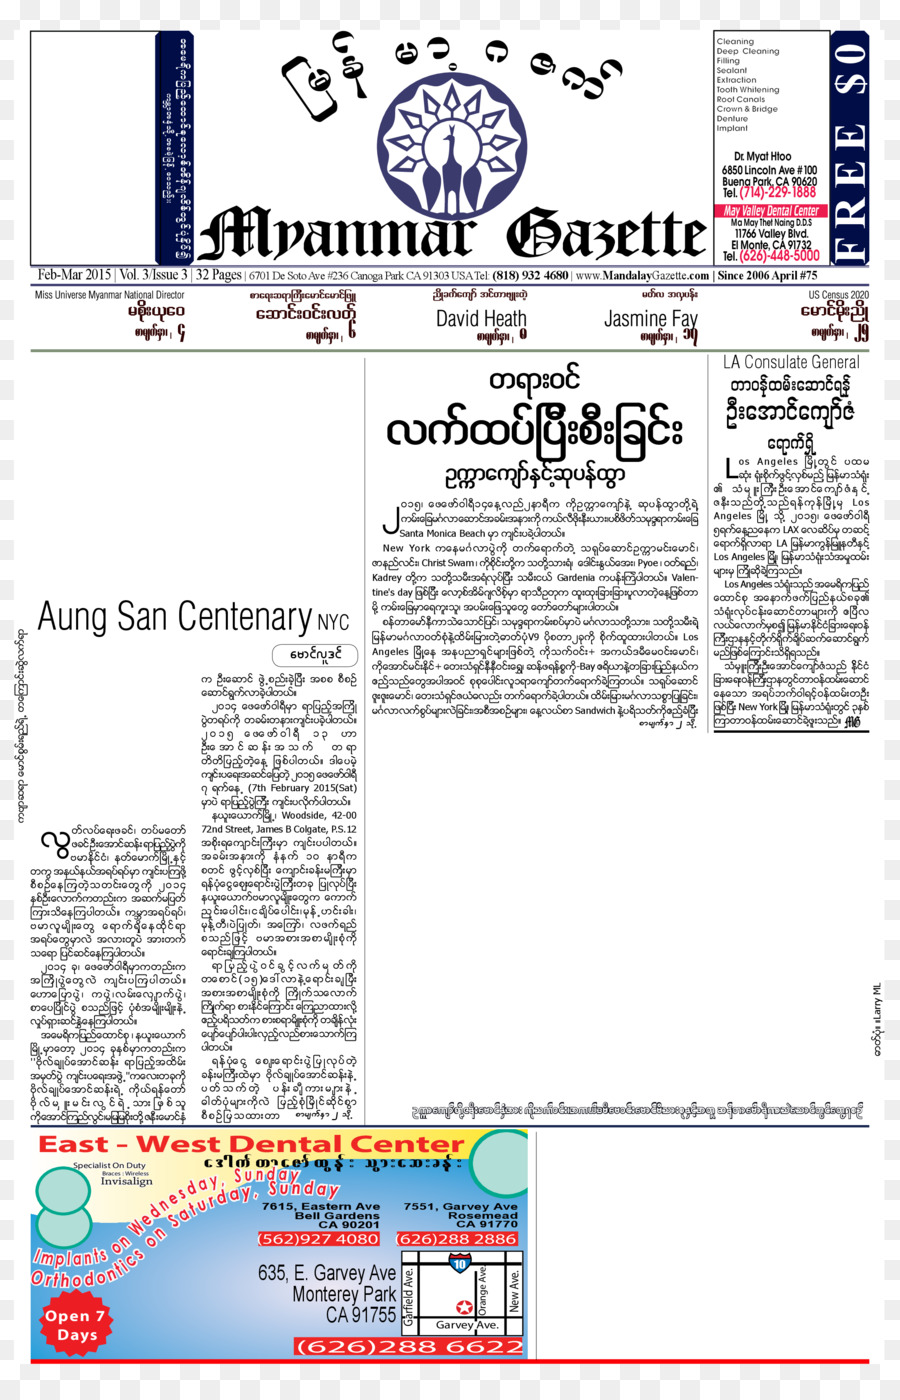 Documento di Giornale Mandalay Gazzetta Pubblicazione issuu - gazzetta